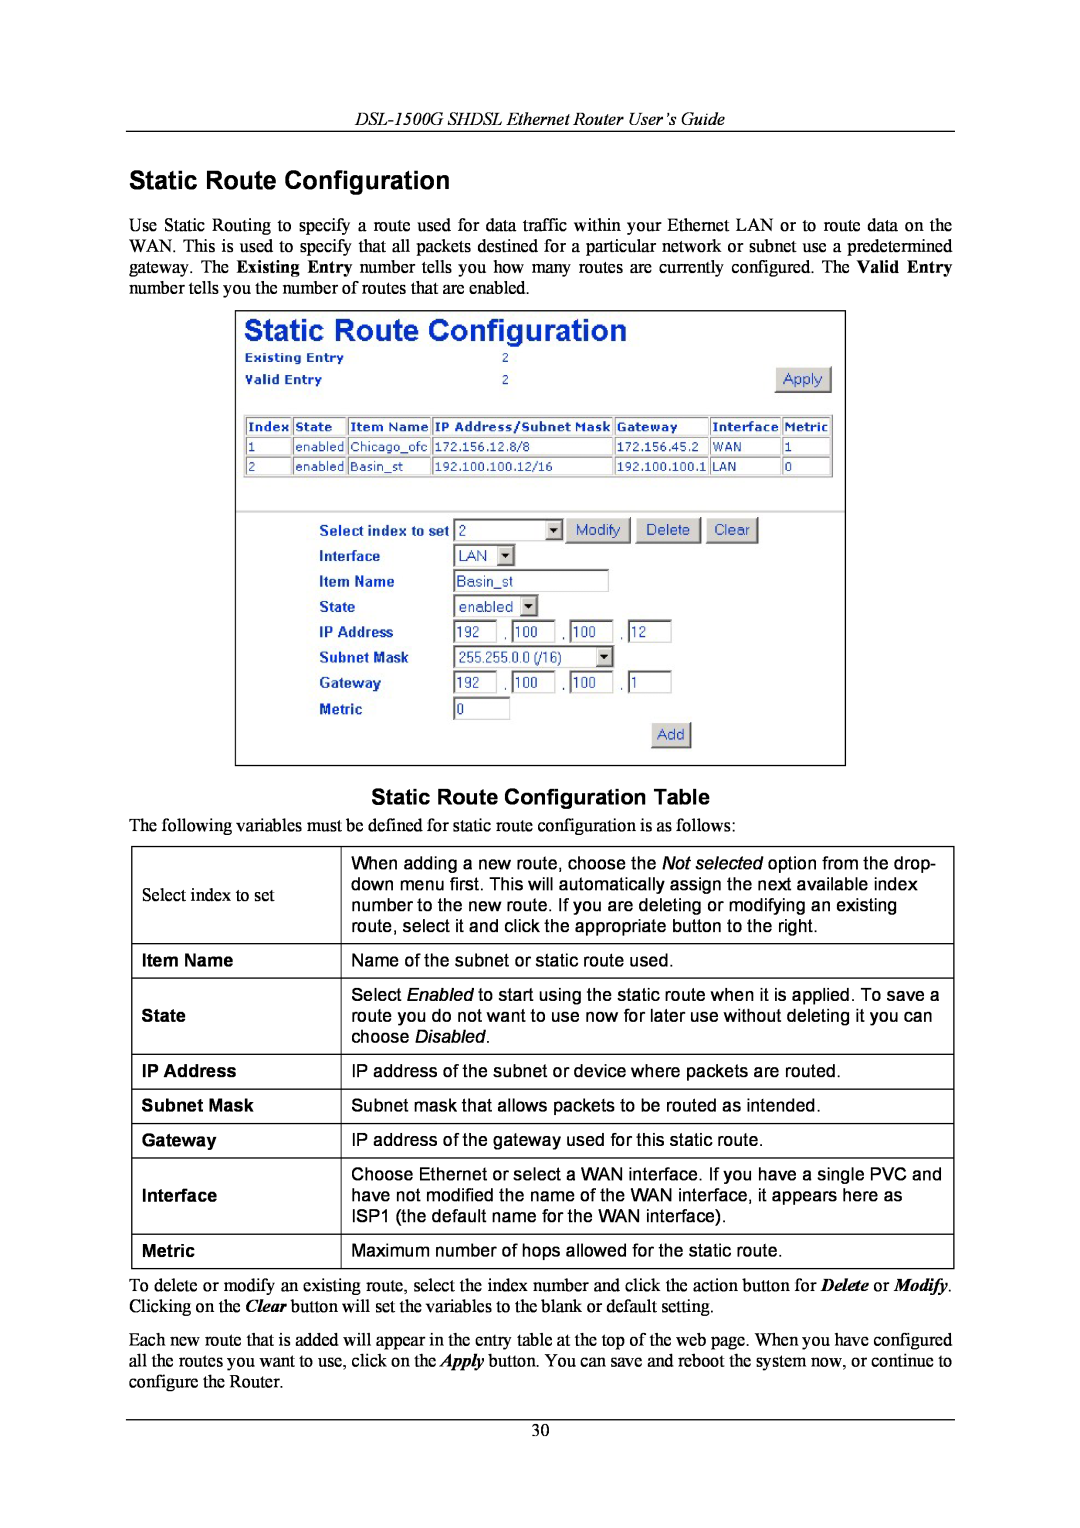 D-Link manual Static Route Configuration Table, DSL-1500G SHDSL Ethernet Router User’s Guide 